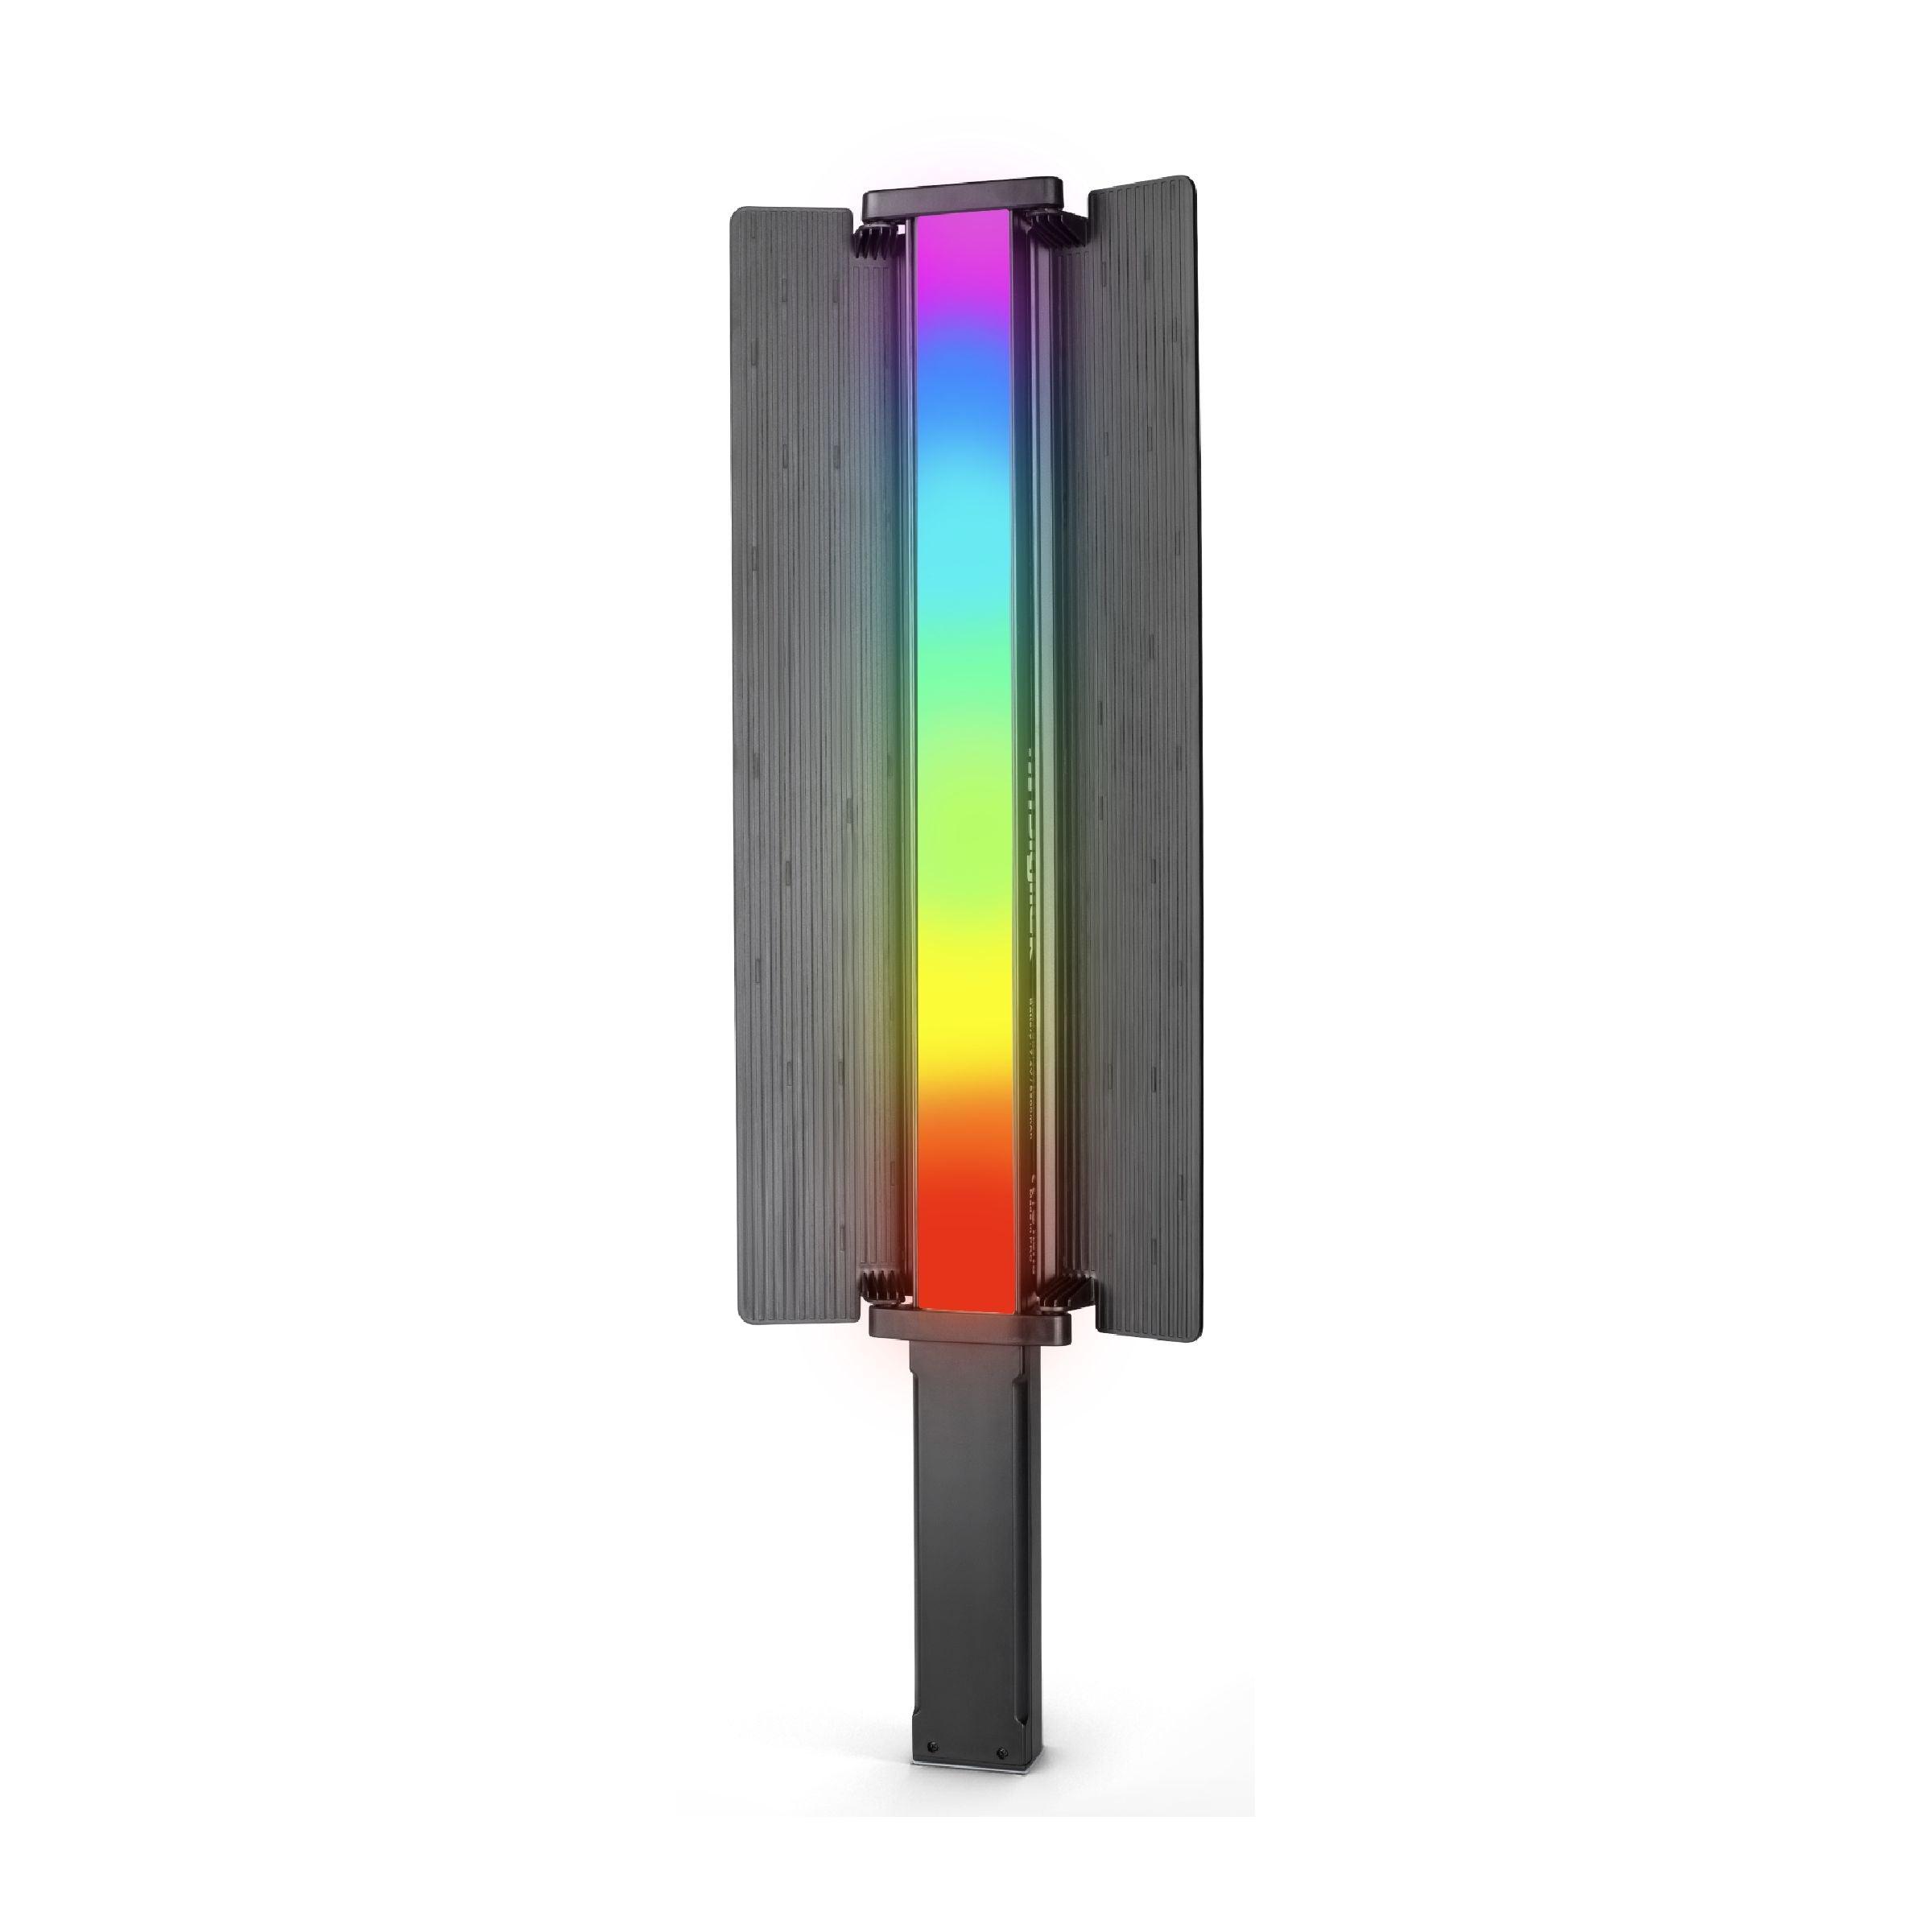 Buy Stick Light Online Best Prices